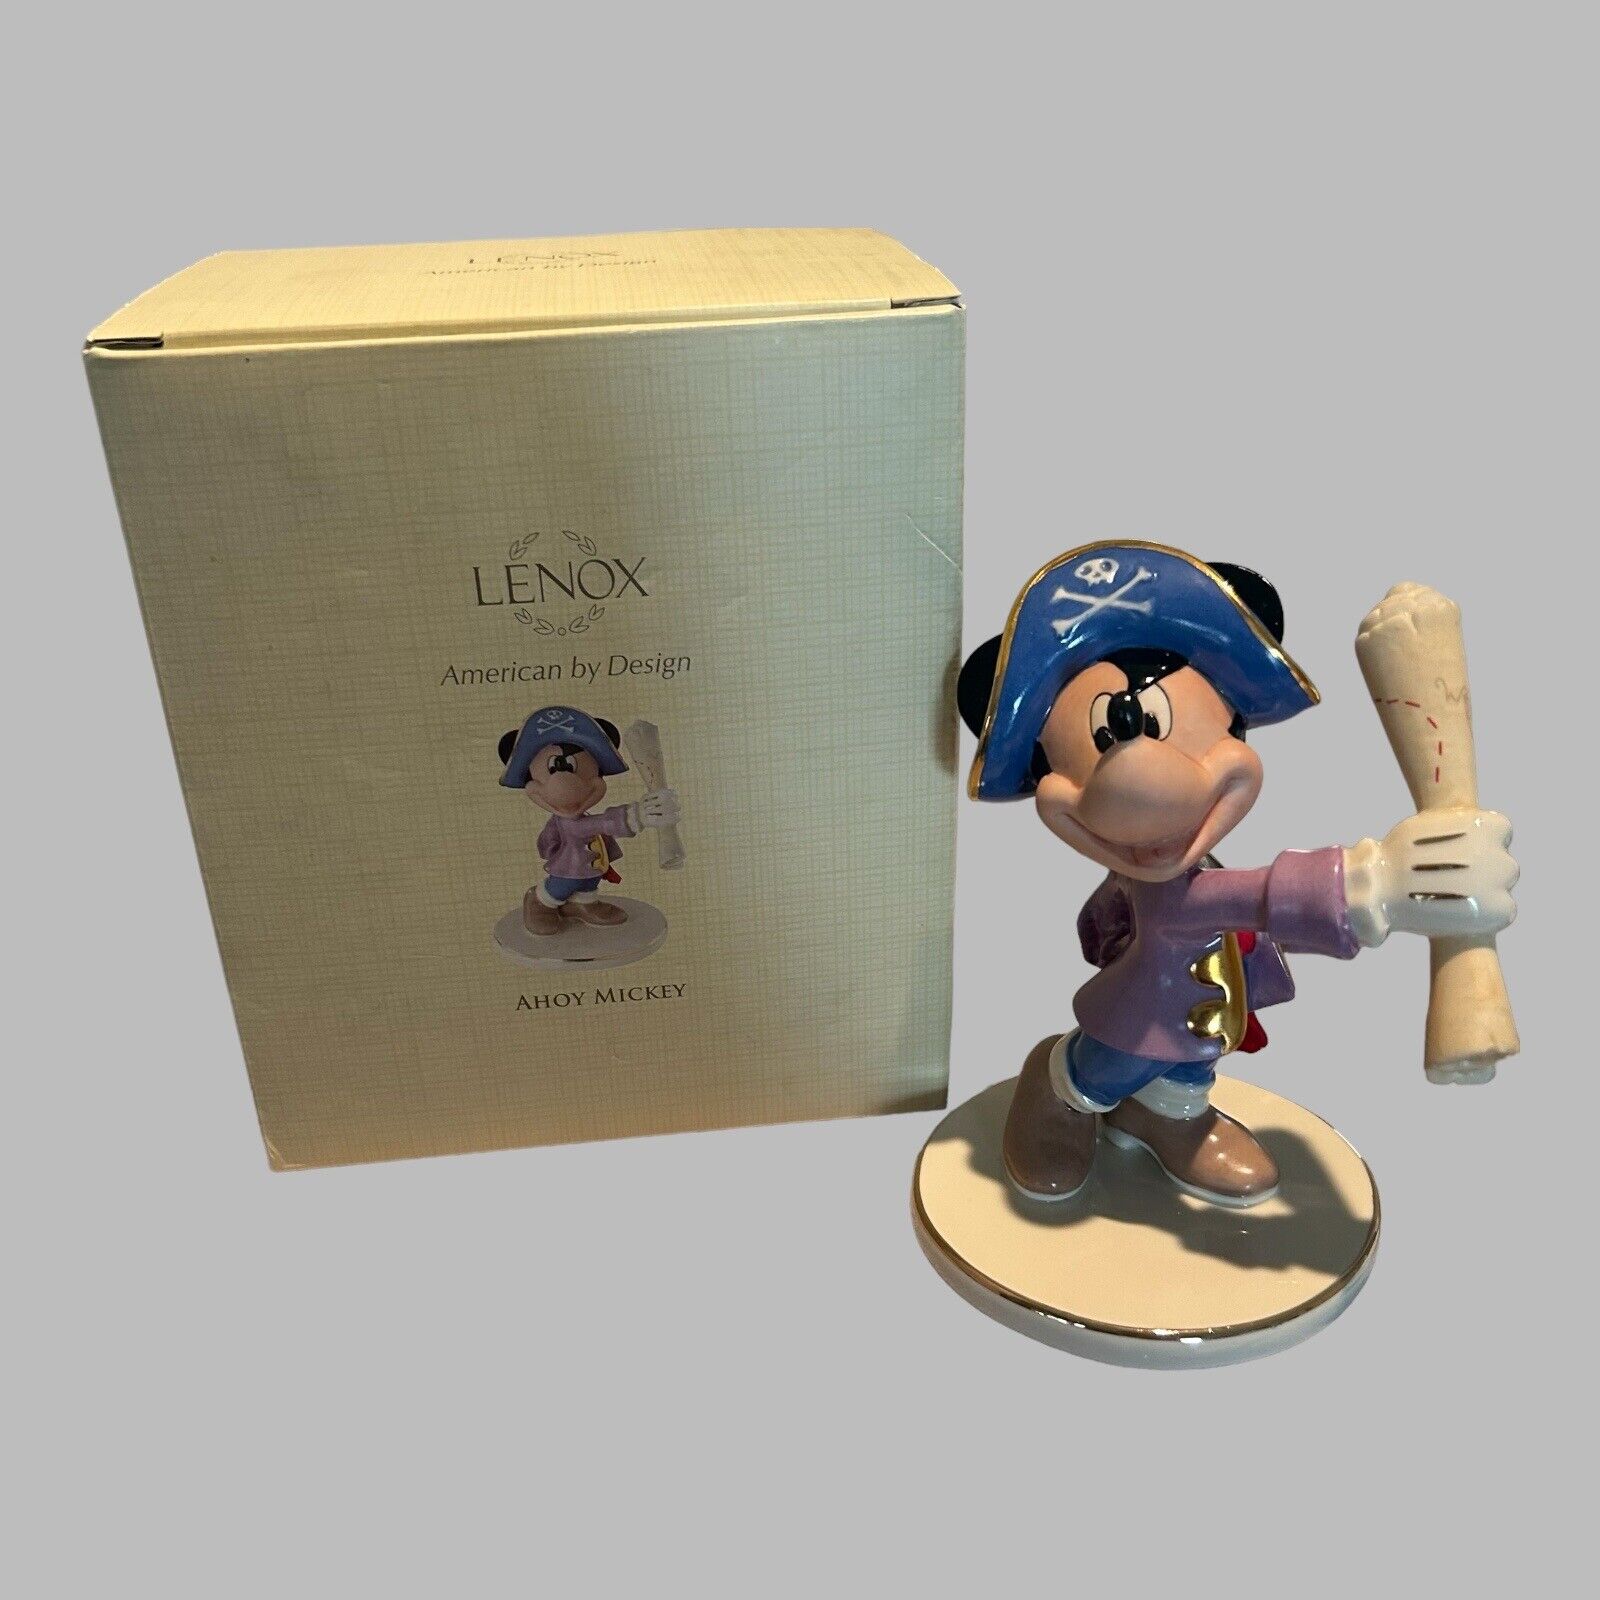 Lenox Disney Ahoy Mickey Figurine American by Design New Box Certificate Pirate